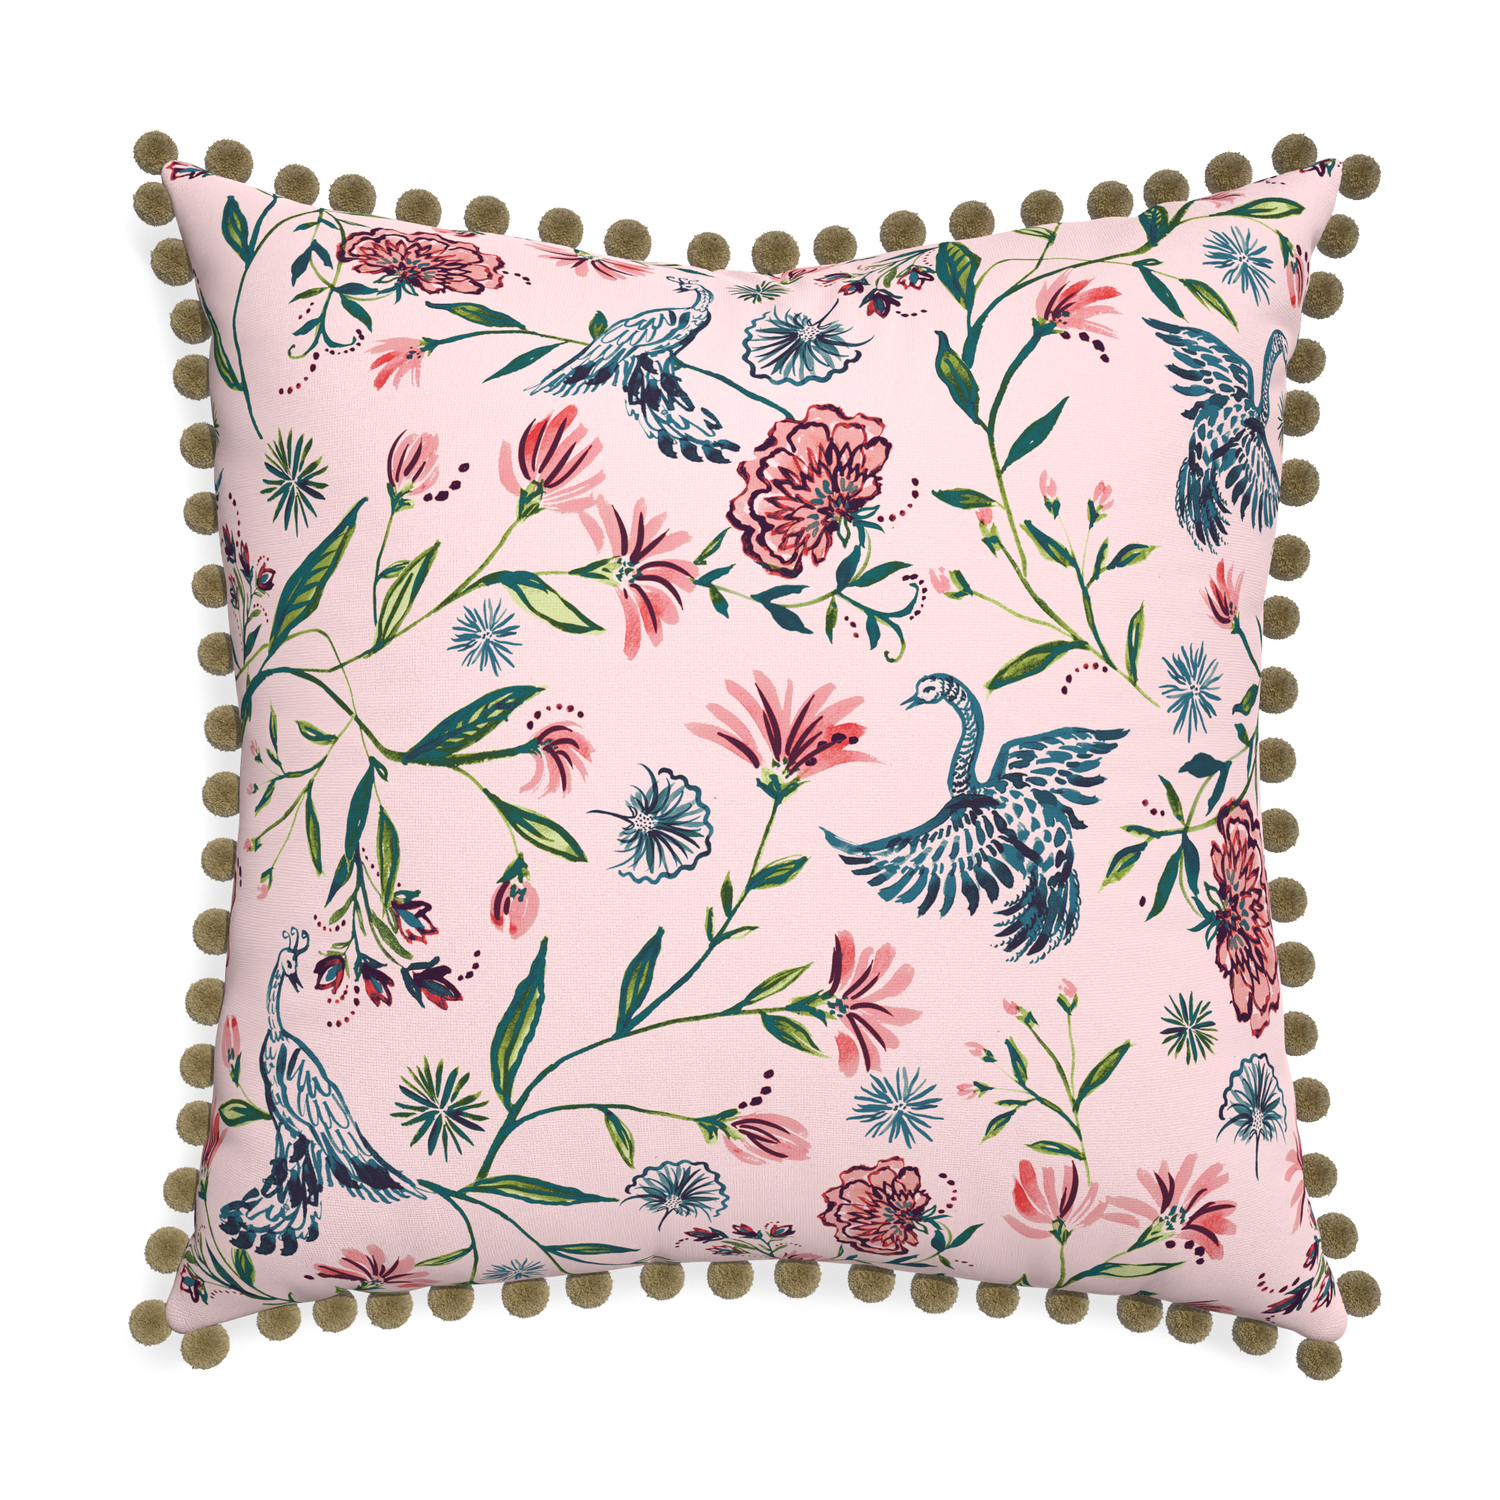 Euro-sham daphne rose custom pillow with olive pom pom on white background